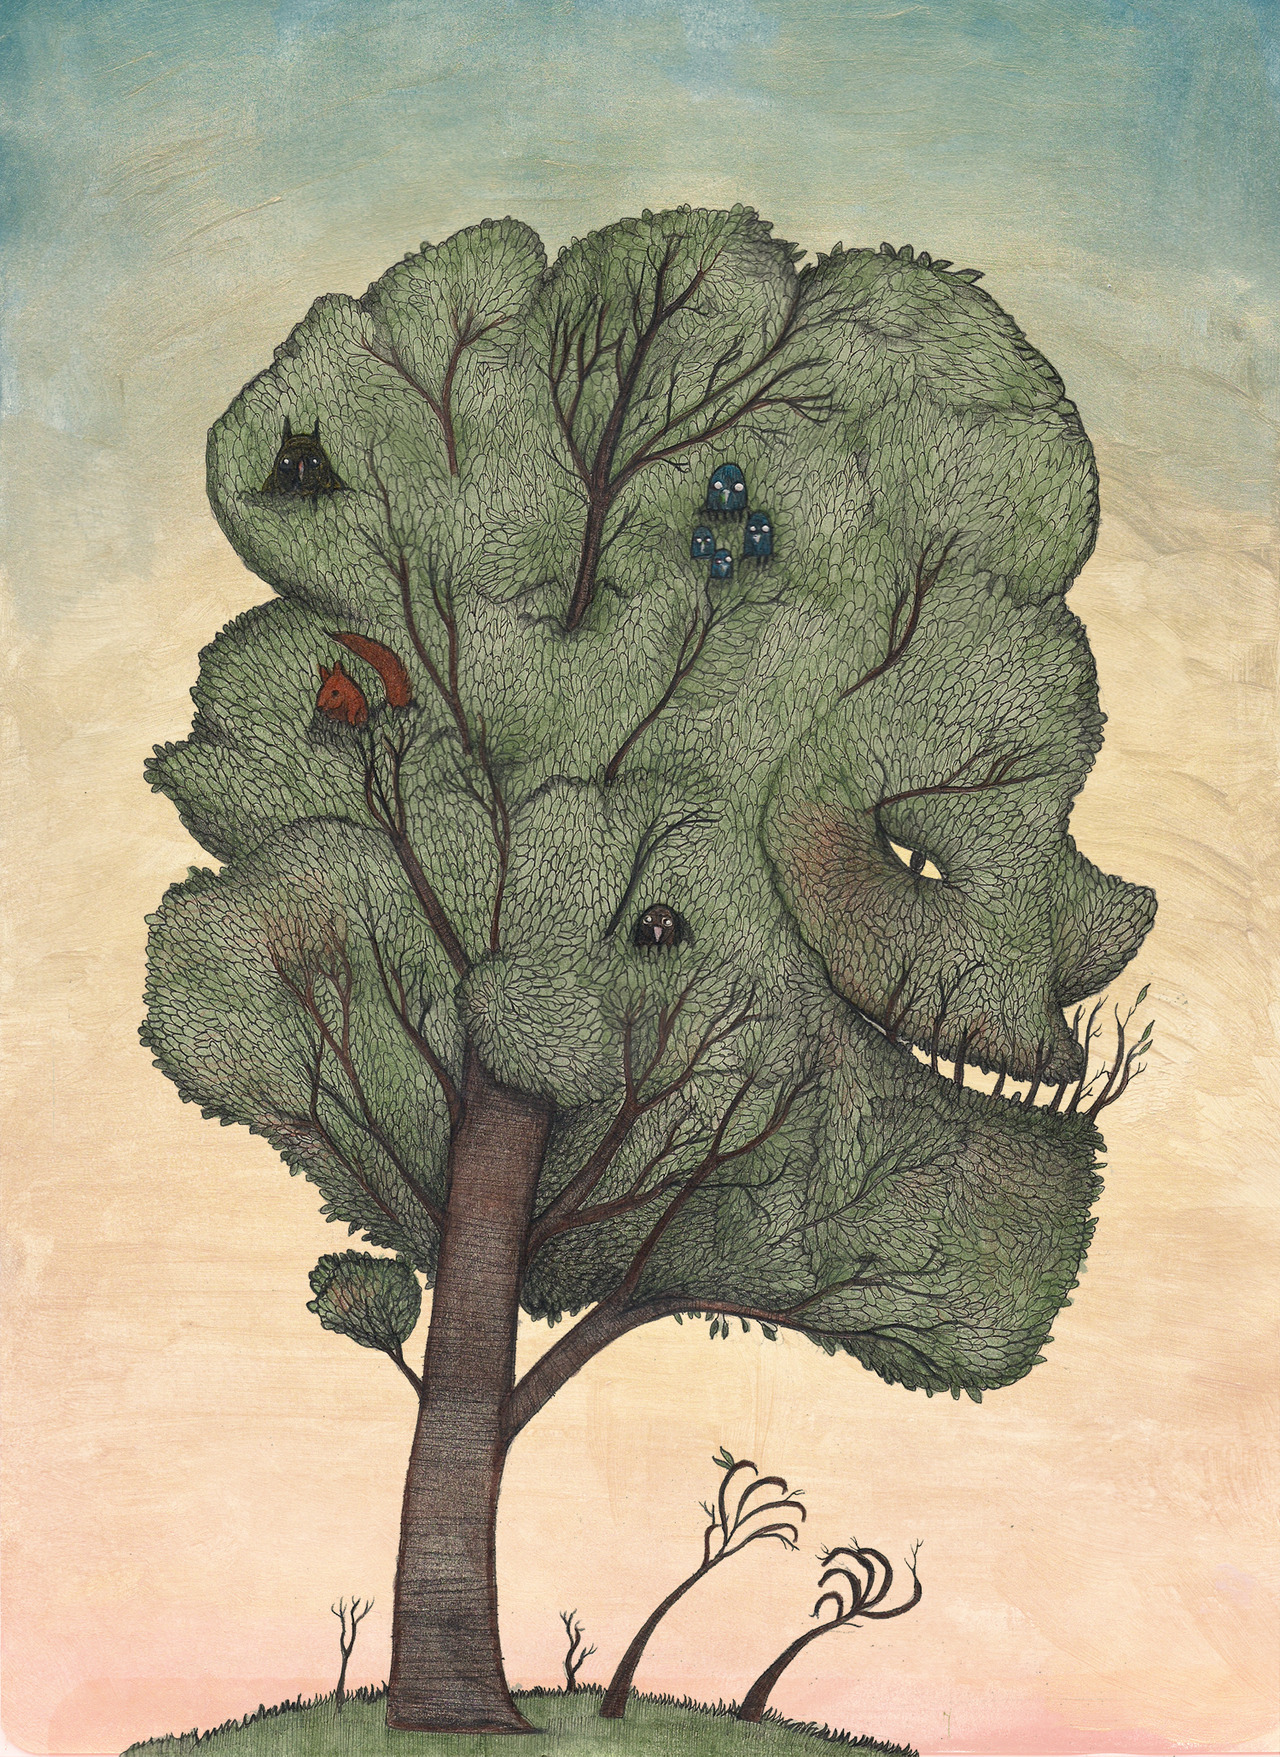 ‘Creature Tree' http://www.facebook.com/davidlitchfieldillustration